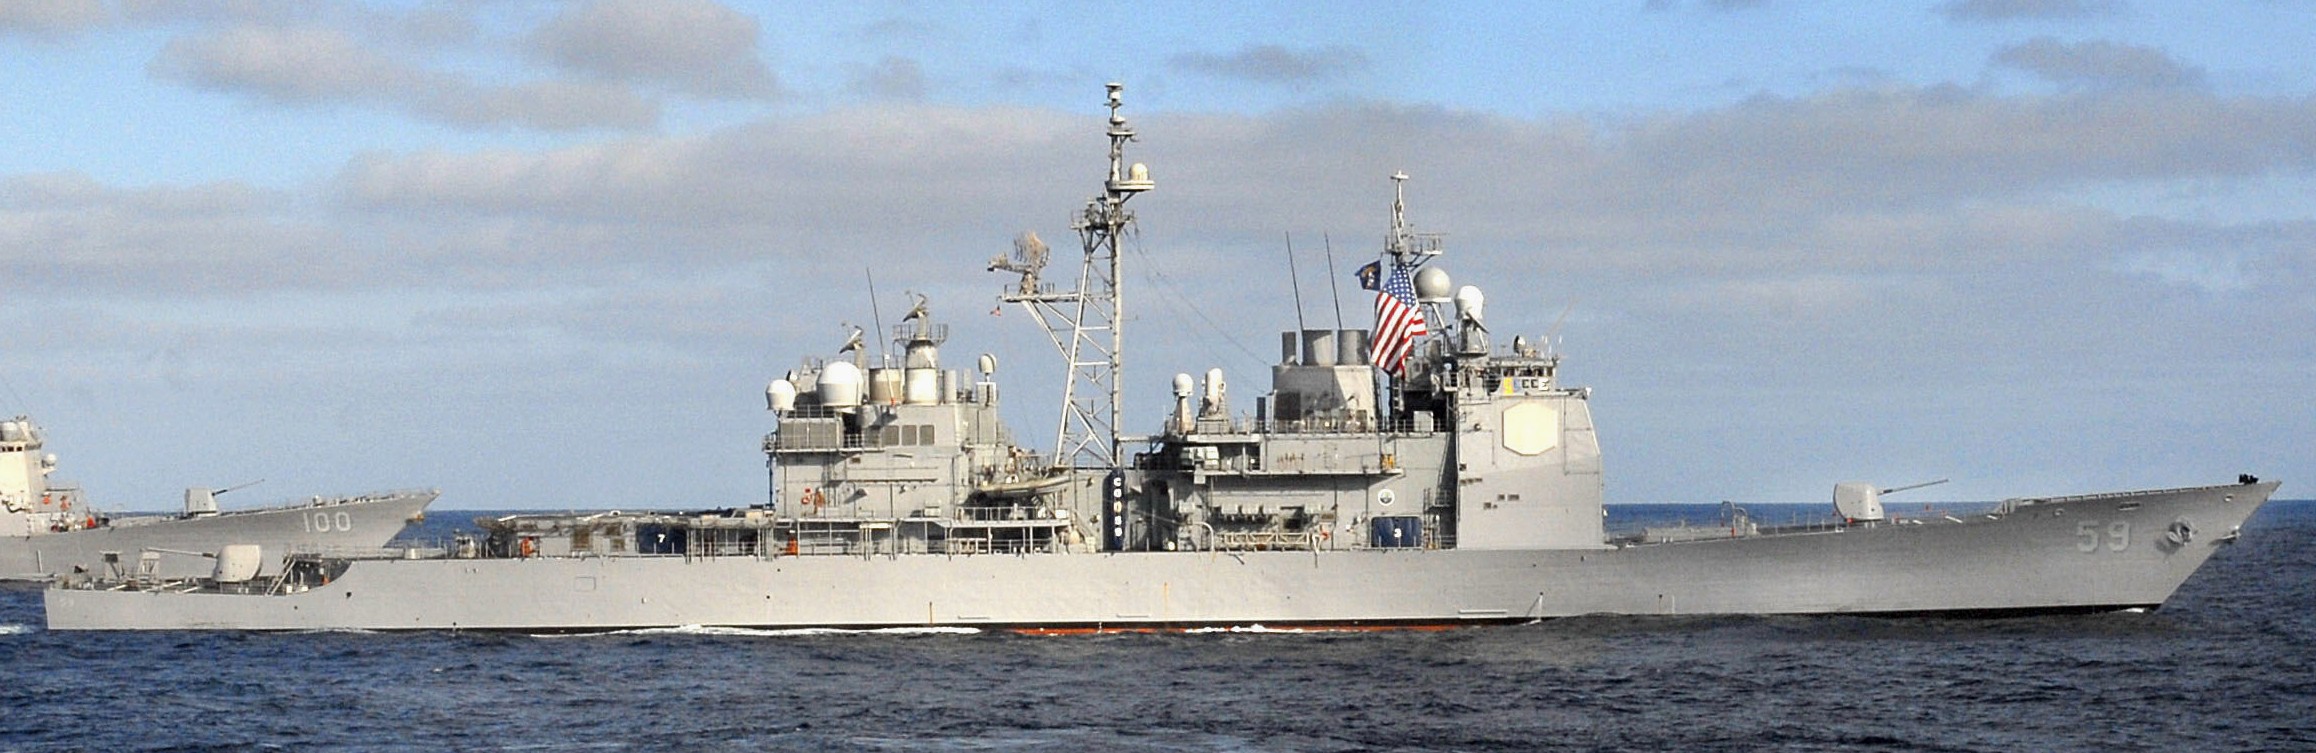 cg-59 uss princeton ticonderoga class guided missile cruiser aegis us navy 25